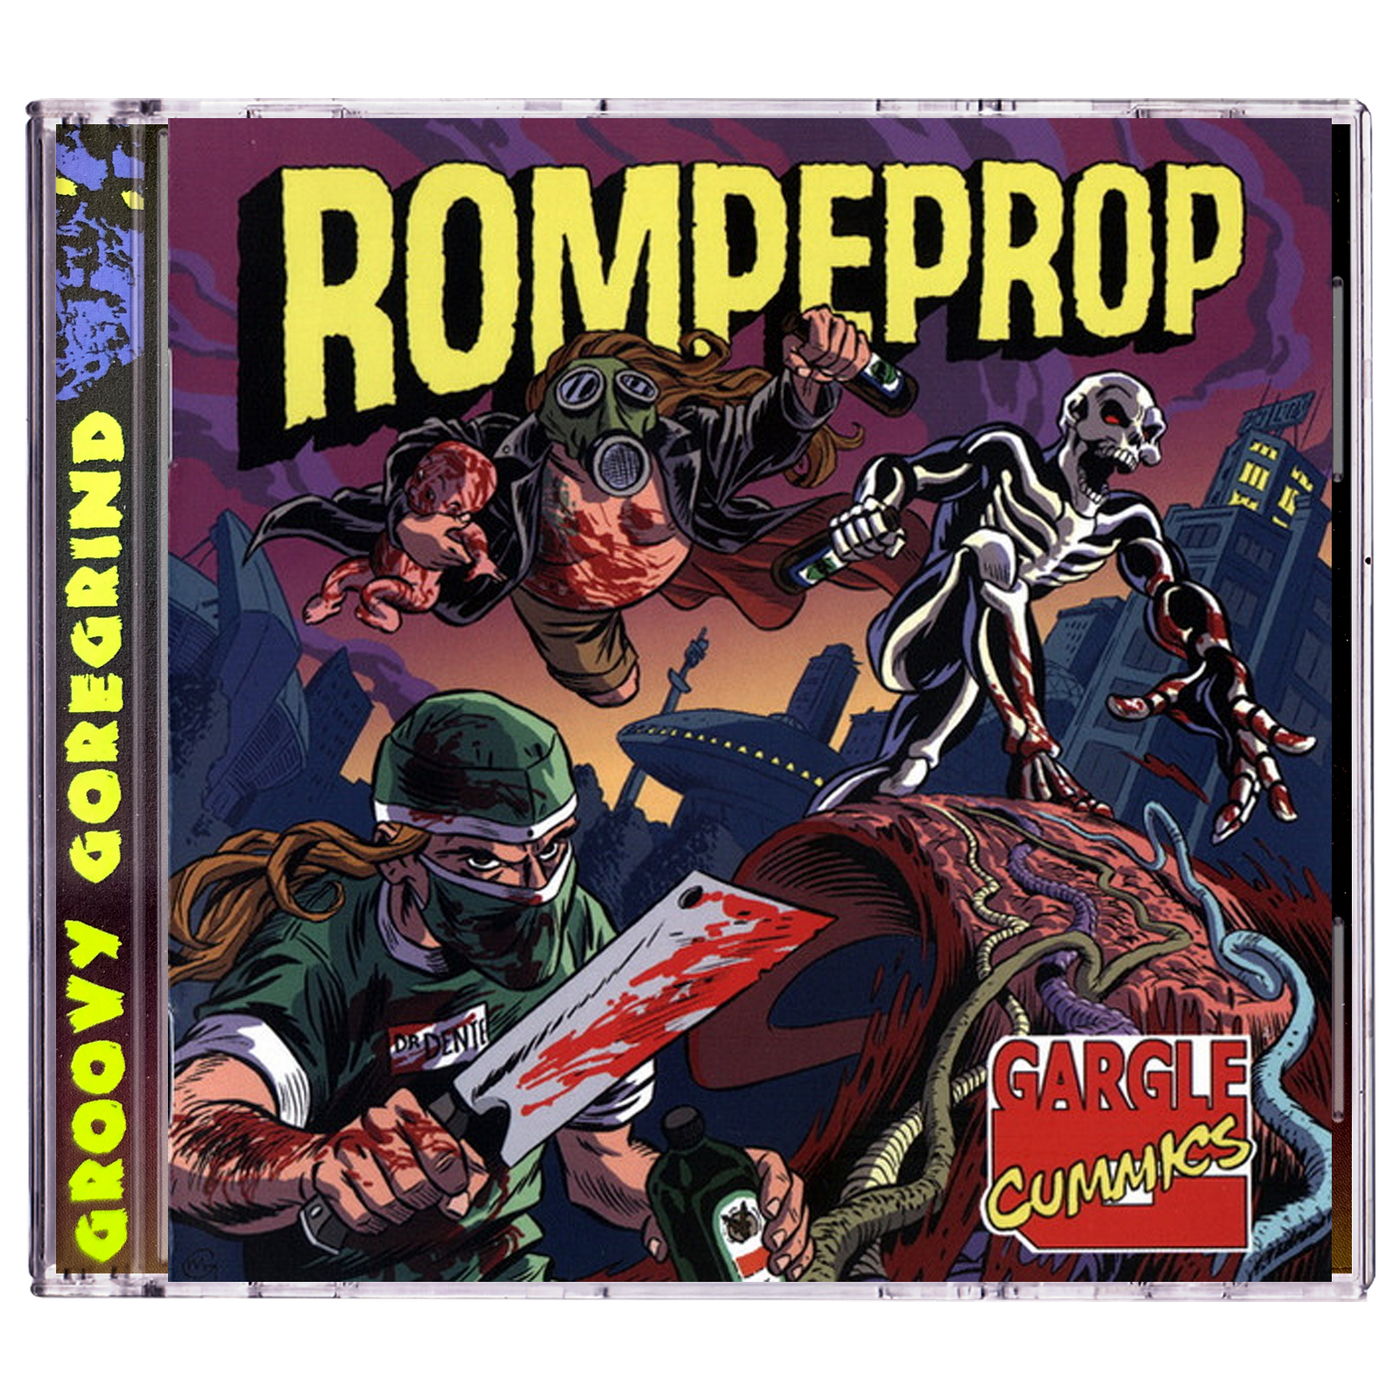 Rompeprop 'Gargle Cummics' CD